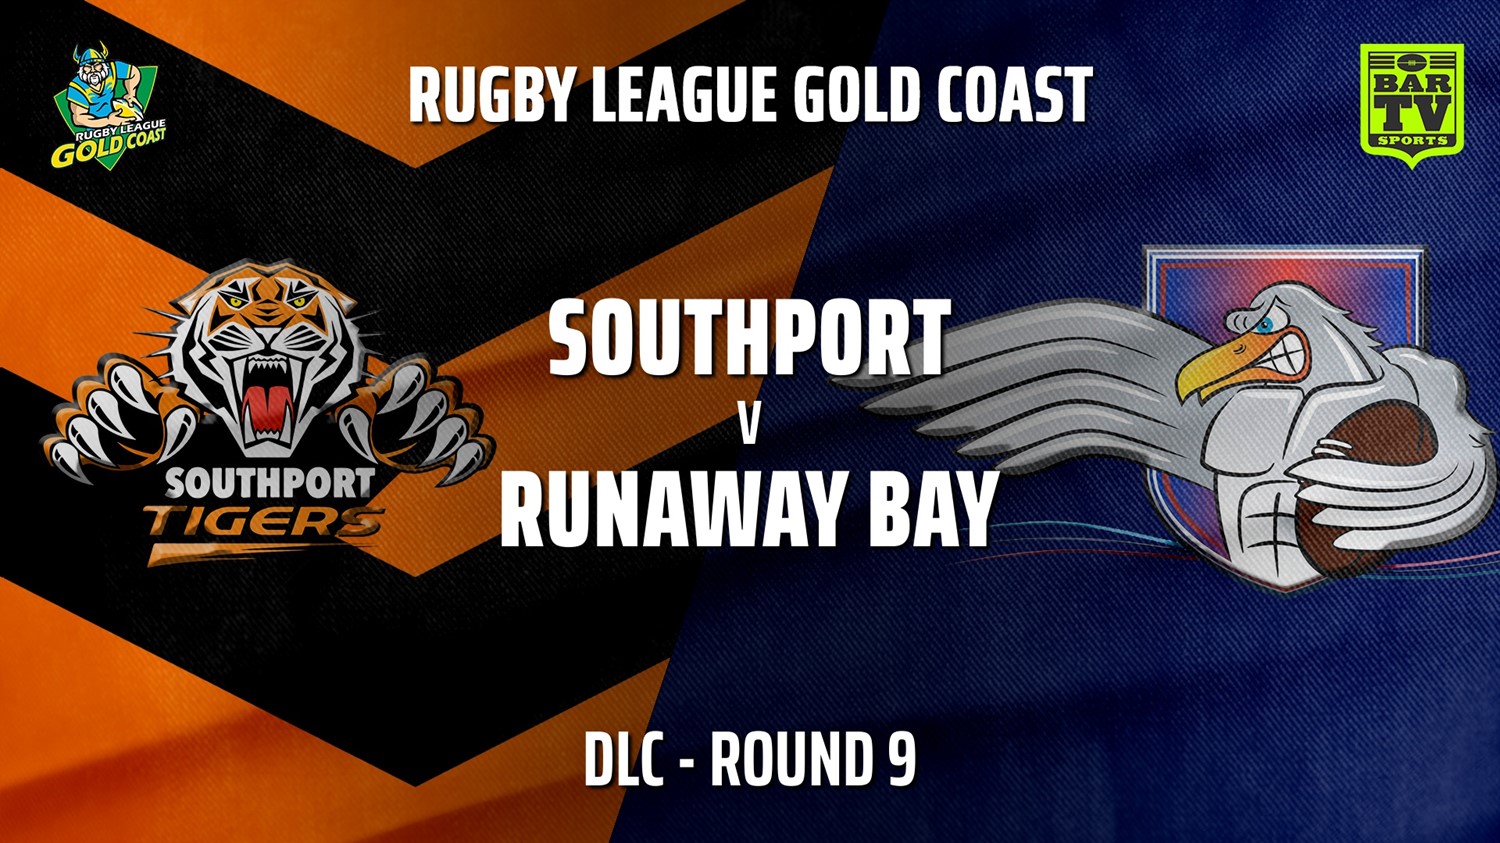 210710-Gold Coast Round 9 - DLC - Southport Tigers v Runaway Bay Slate Image